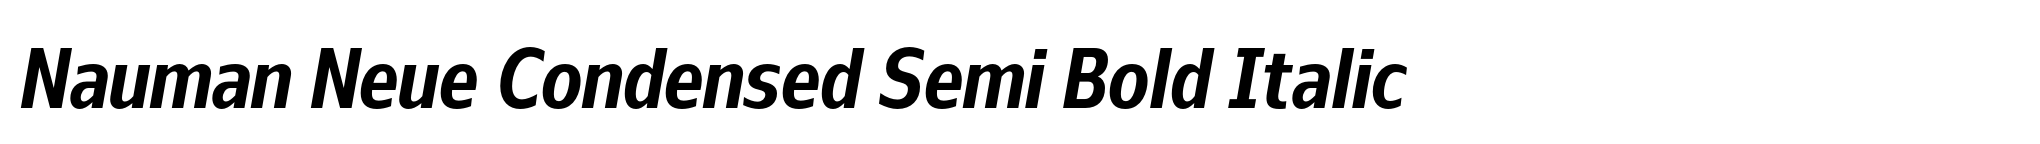 Nauman Neue Condensed Semi Bold Italic image